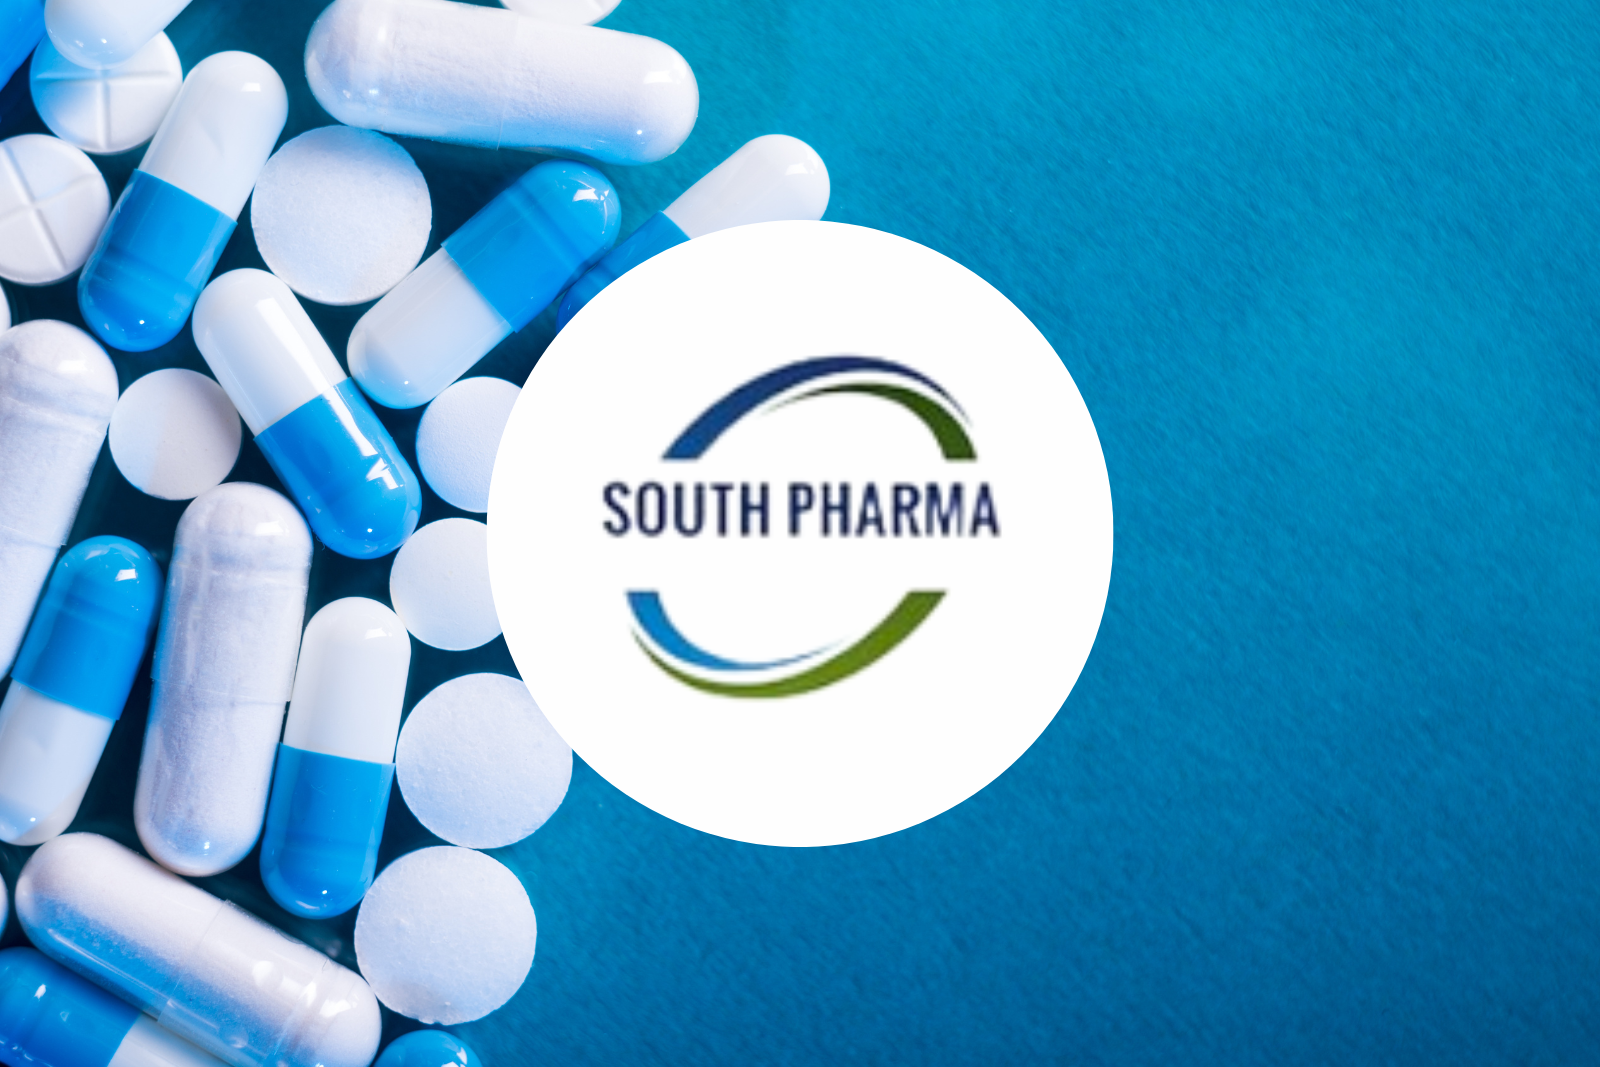 South Pharma